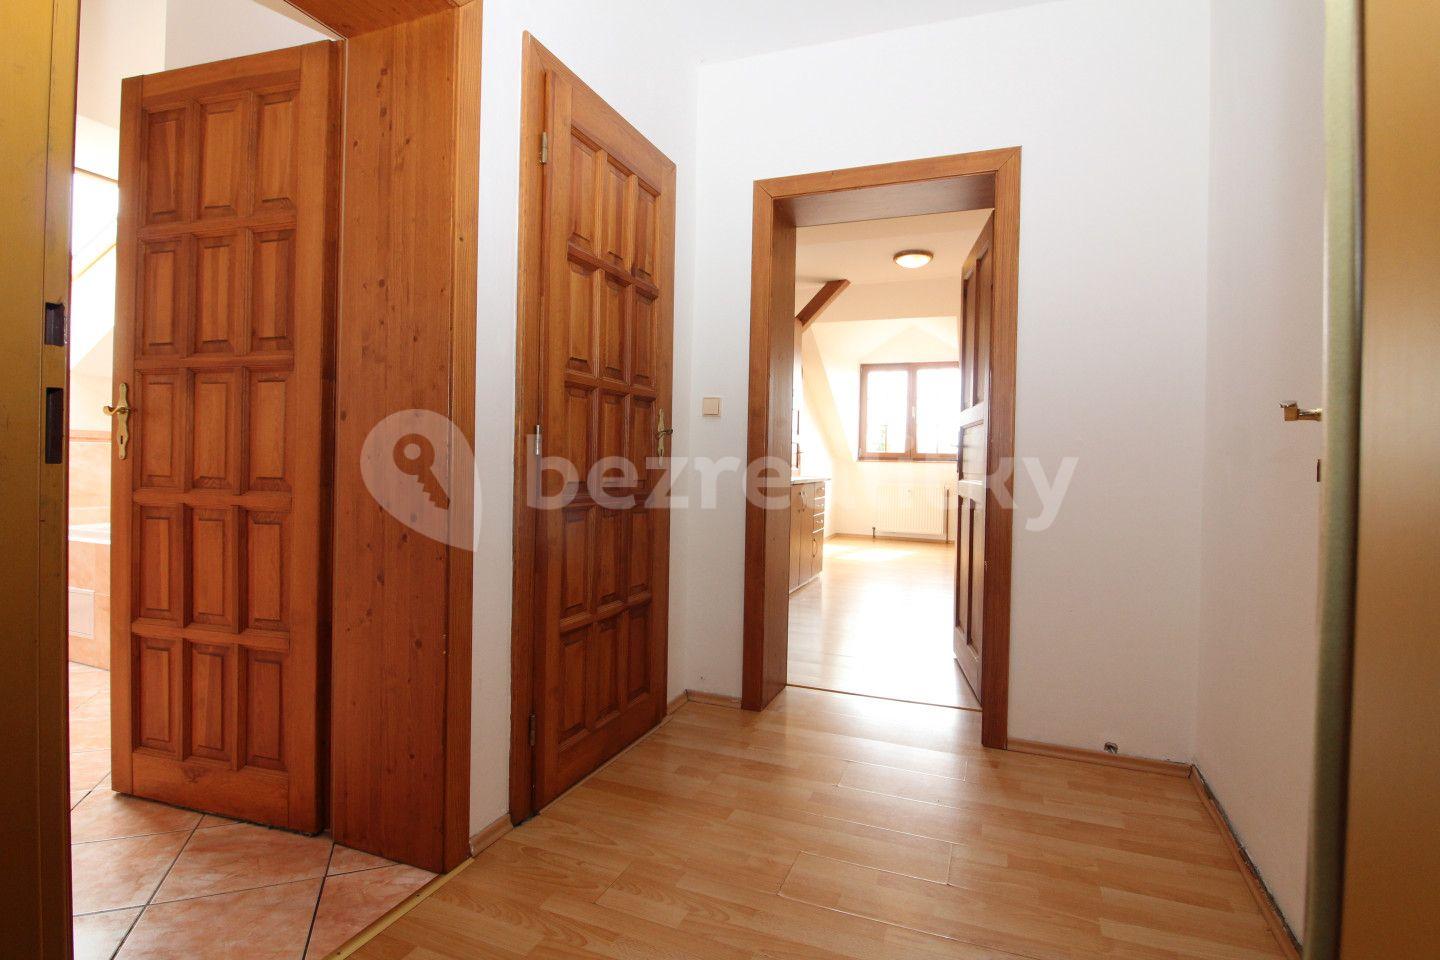 2 bedroom flat for sale, 92 m², Gen. Svobody, Nový Bor, Liberecký Region